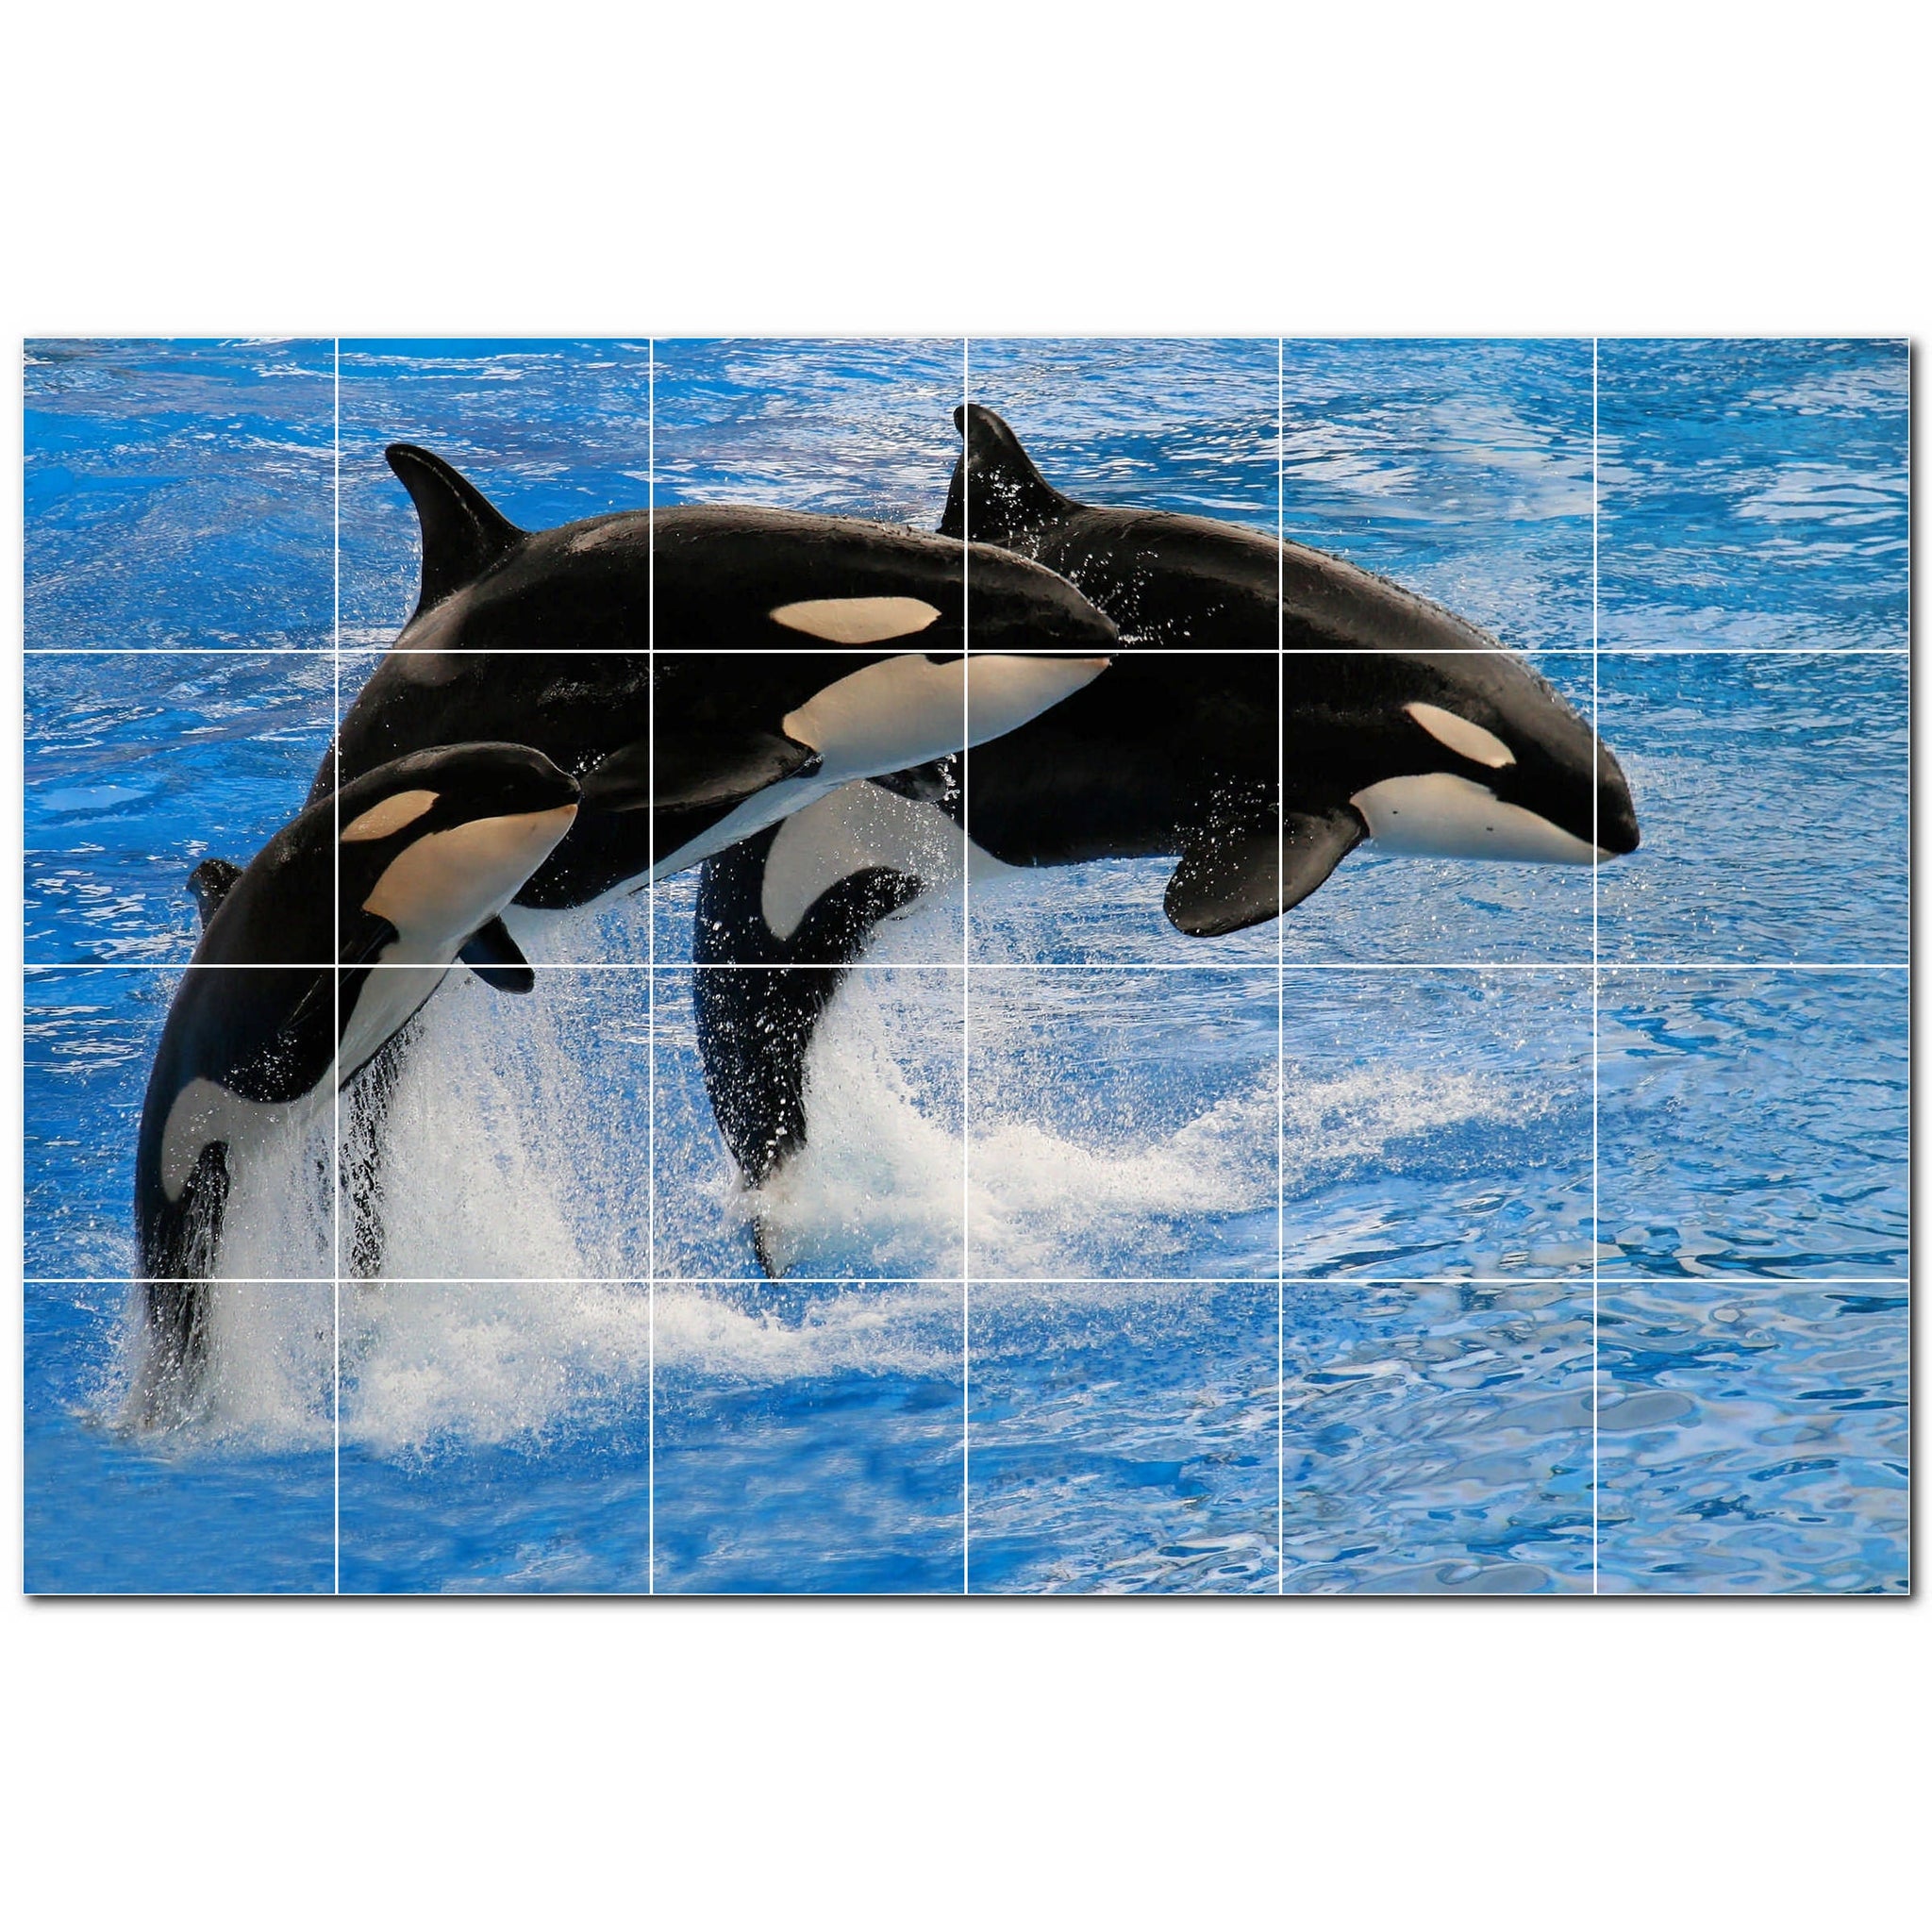 whale ceramic tile wall mural kitchen backsplash bathroom shower p501194